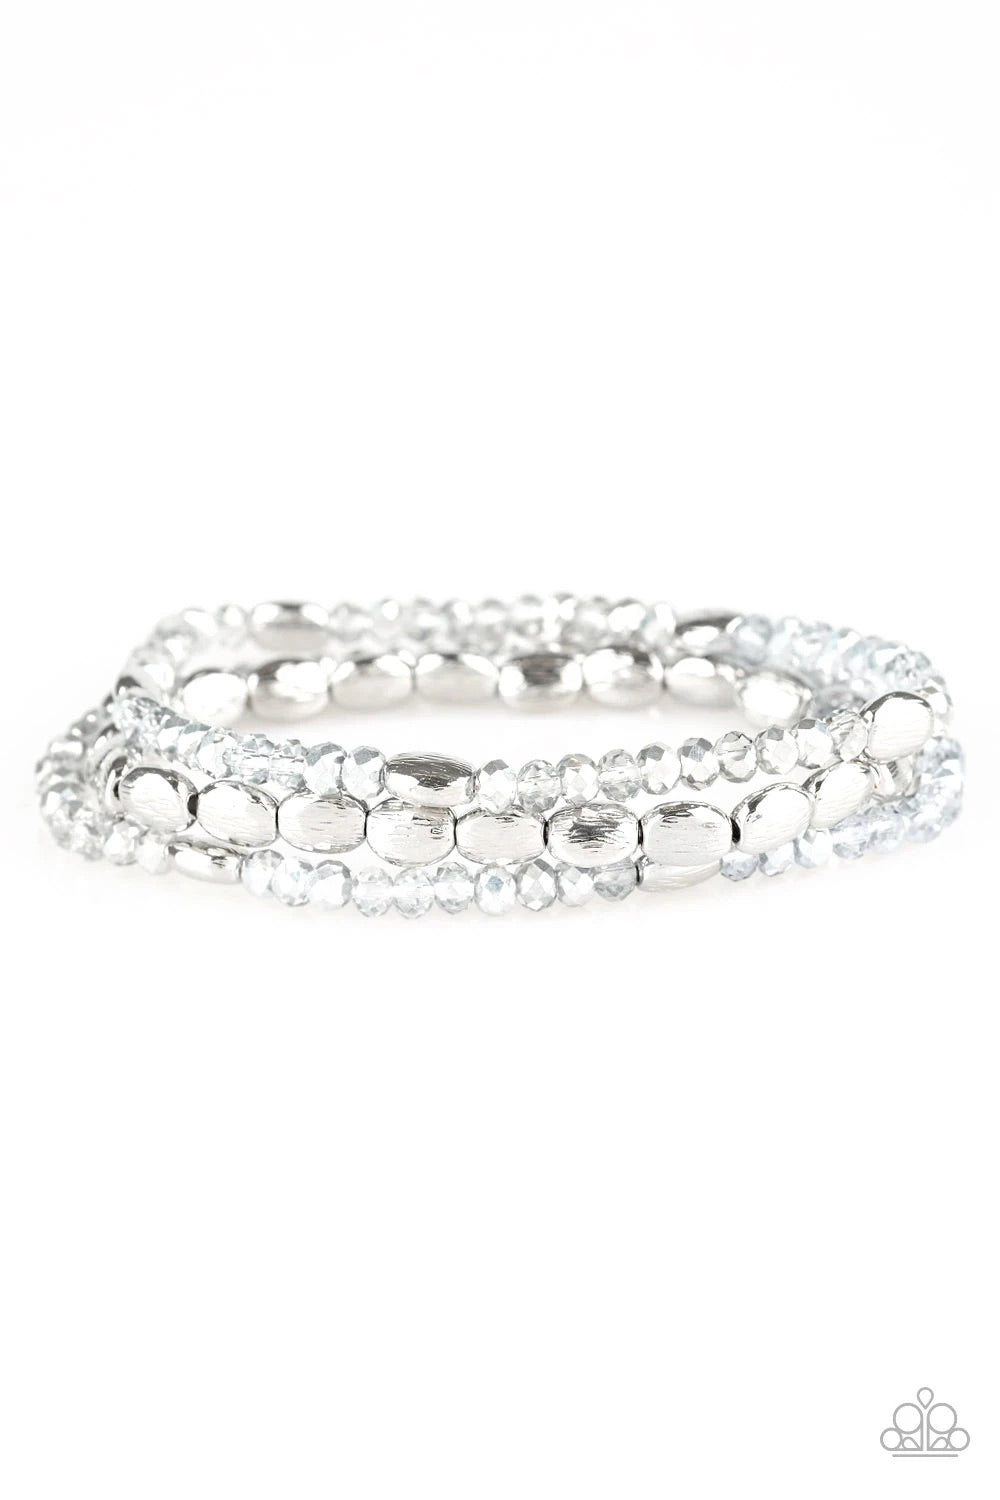 Hello Beautiful Silver Bracelet freeshipping - JewLz4u Gemstone Gallery